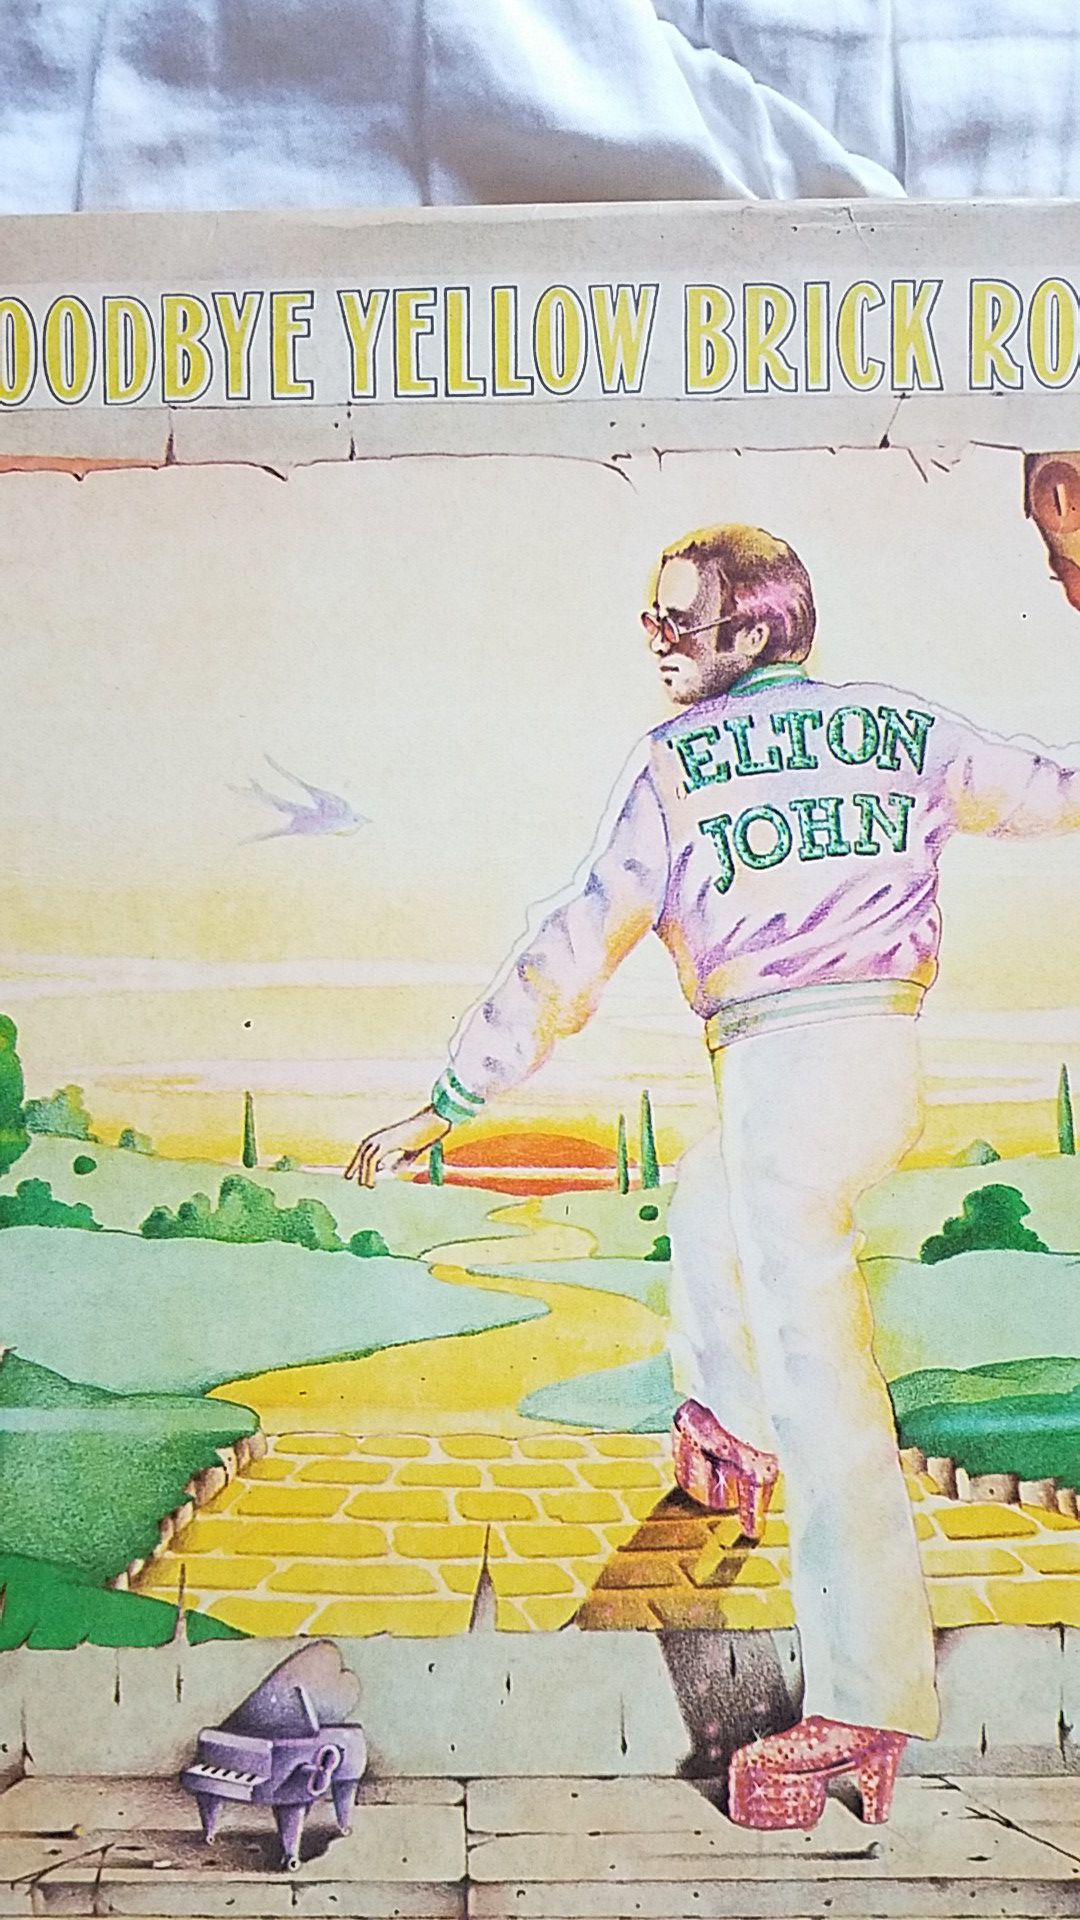 Elton John - Goodbye yellow brick road double LP